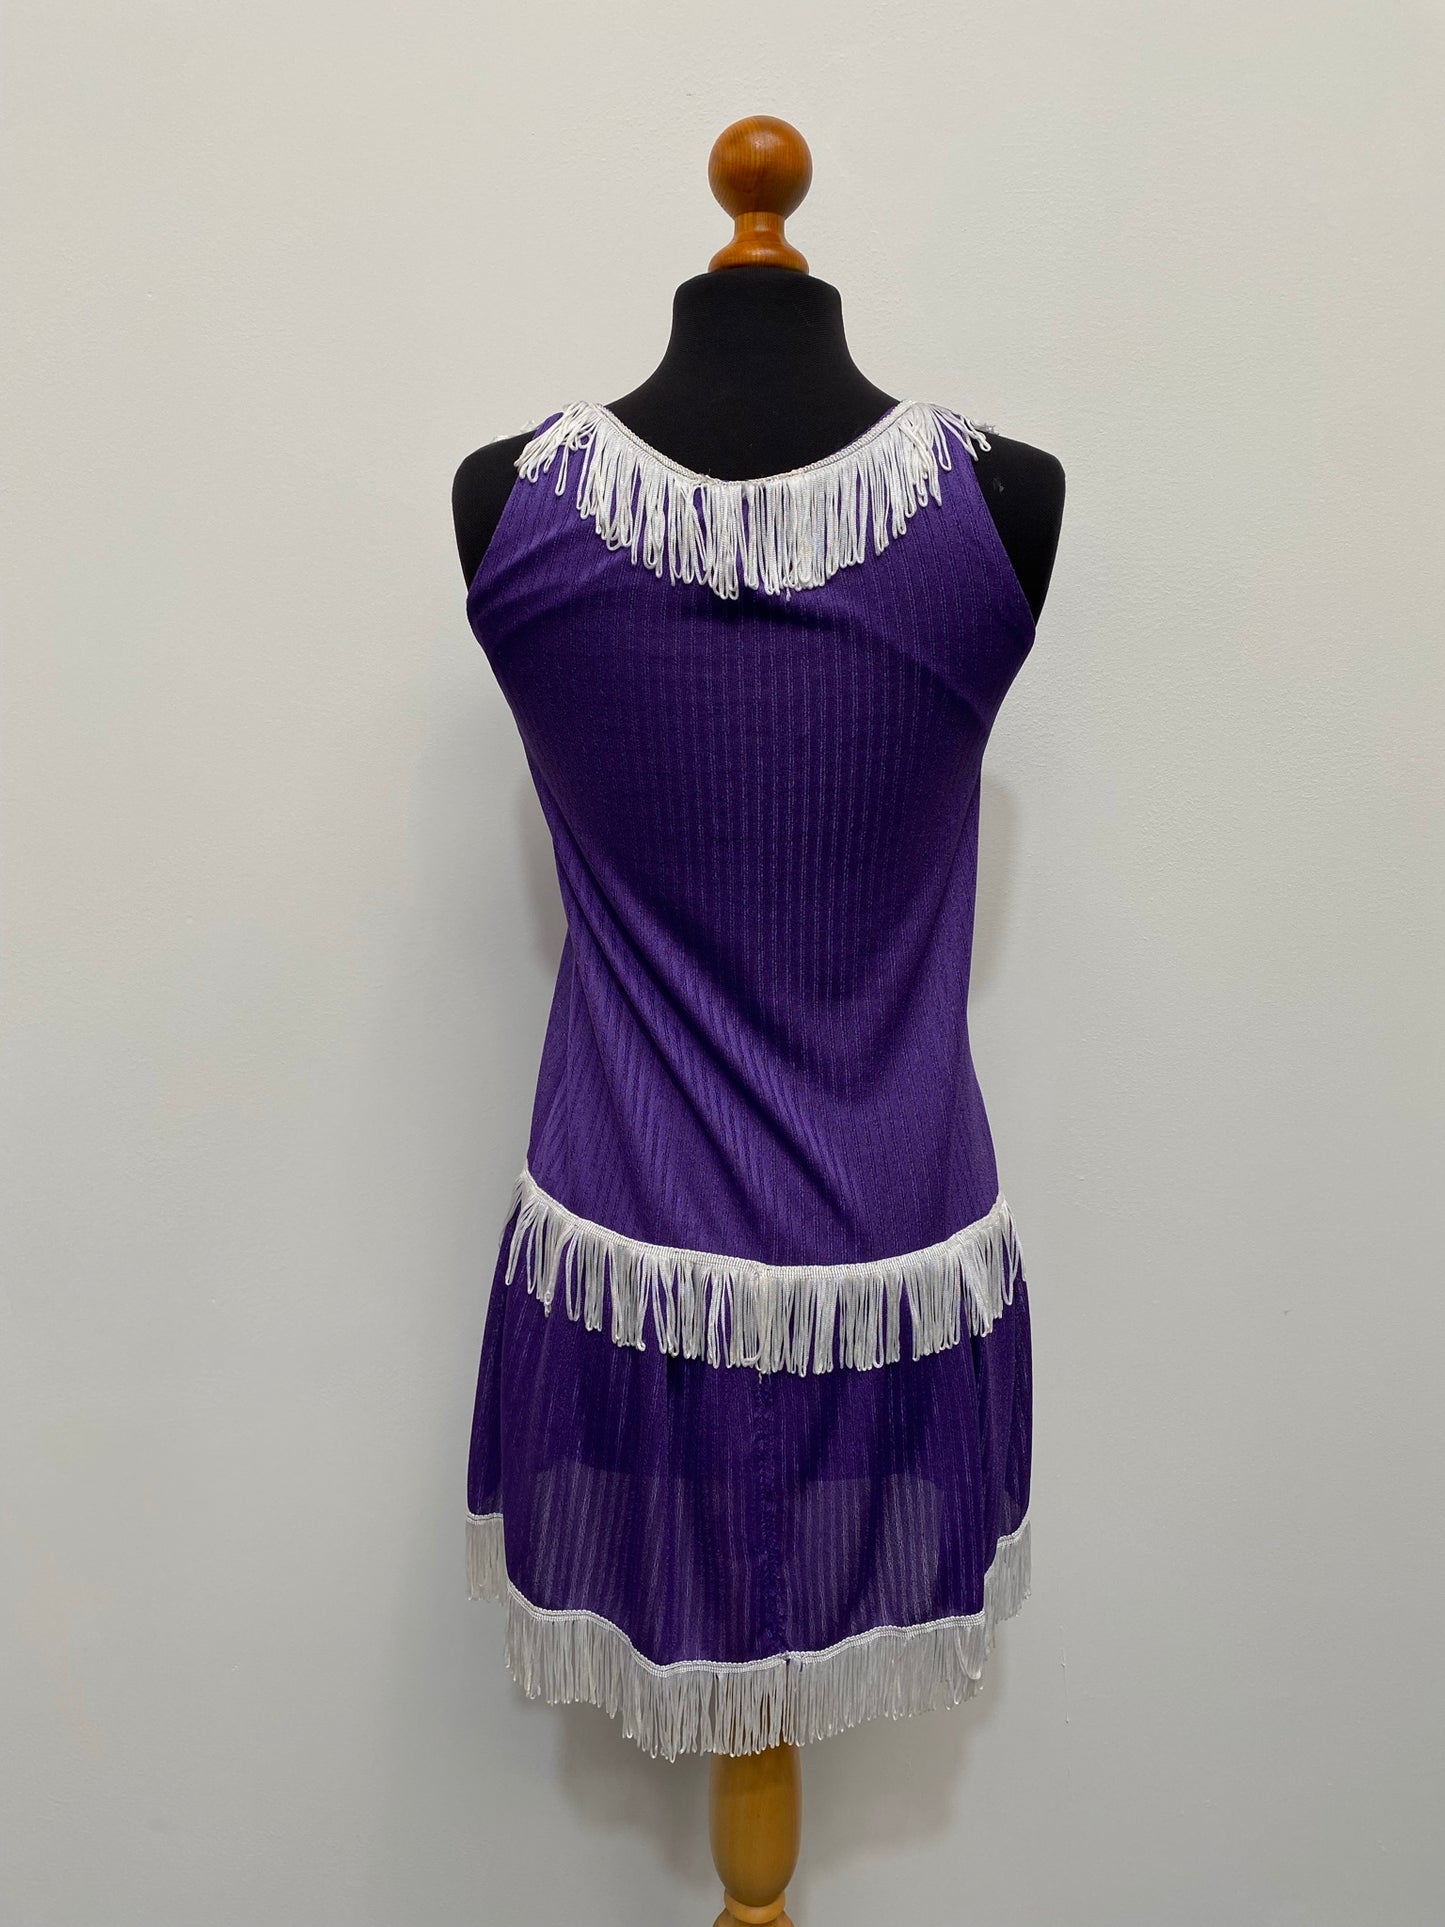 1920s style flapper dress Size XS (uk 8) - Vintage clothing